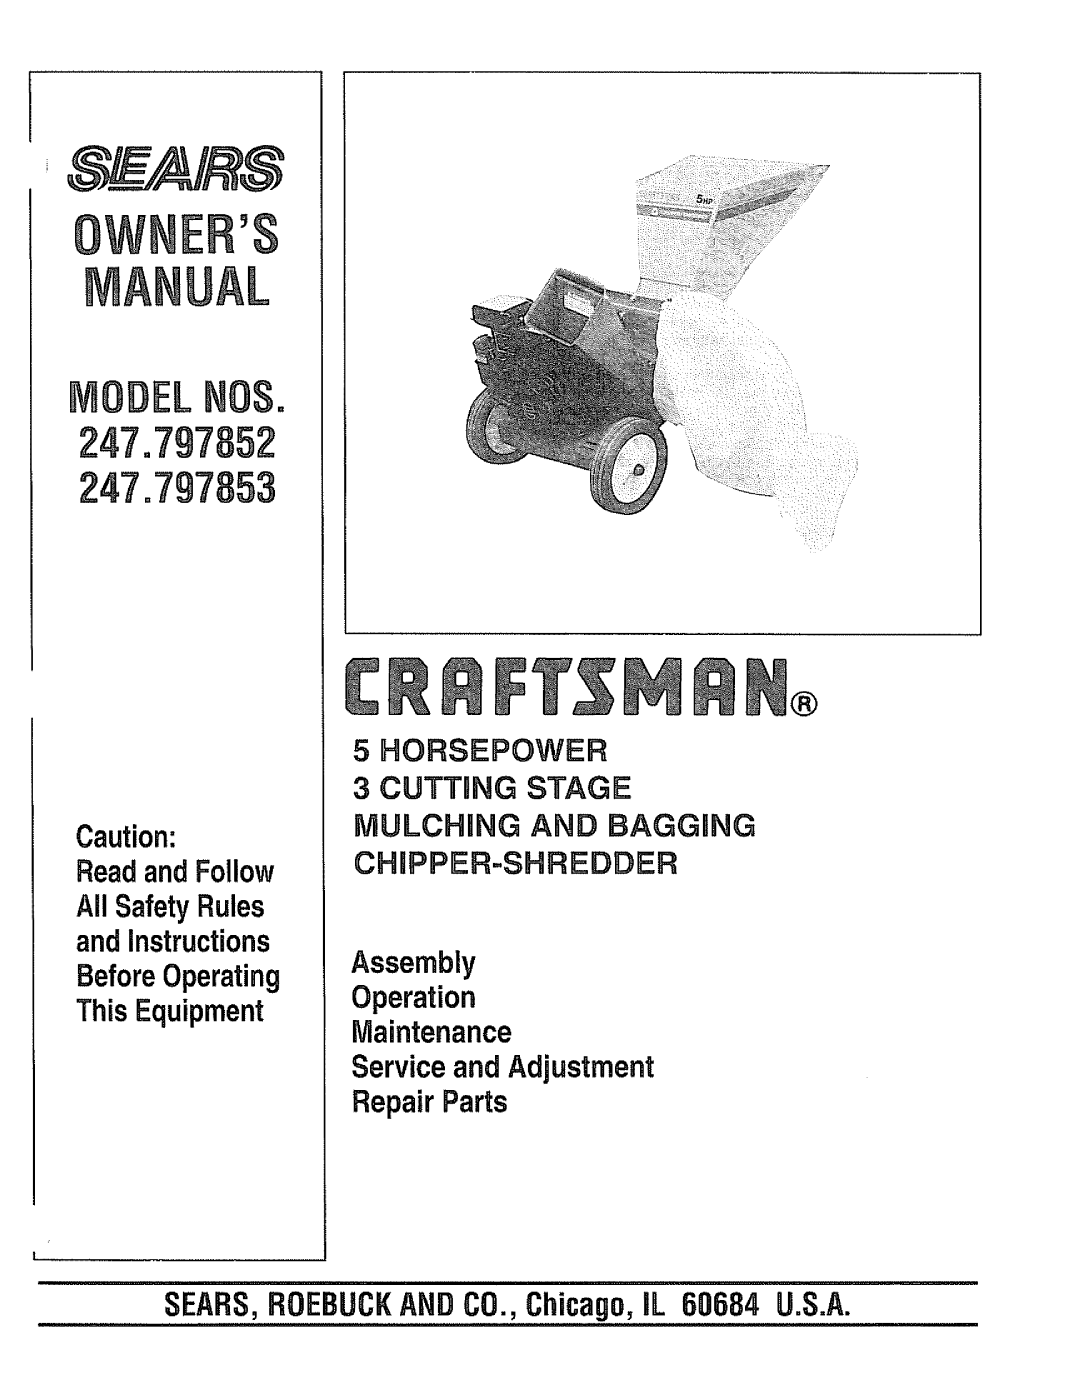 Craftsman 247.797852, 247.797853 manual SEARS,ROEBUCKANDCO.,Chicago,IL 60684 U.S.A, Modelnos 